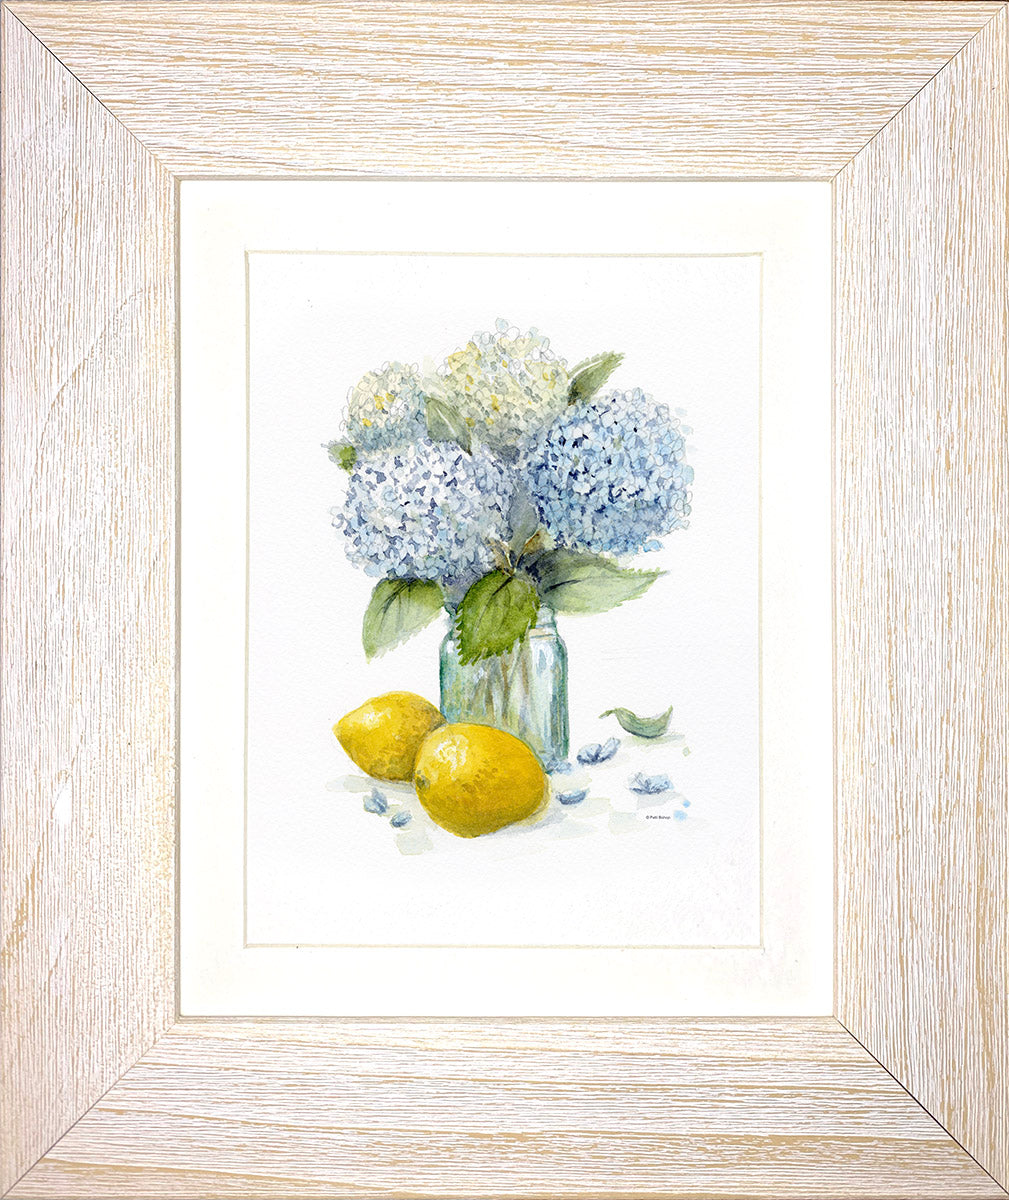 Hydrangea and Lemons 1 Original Watercolor